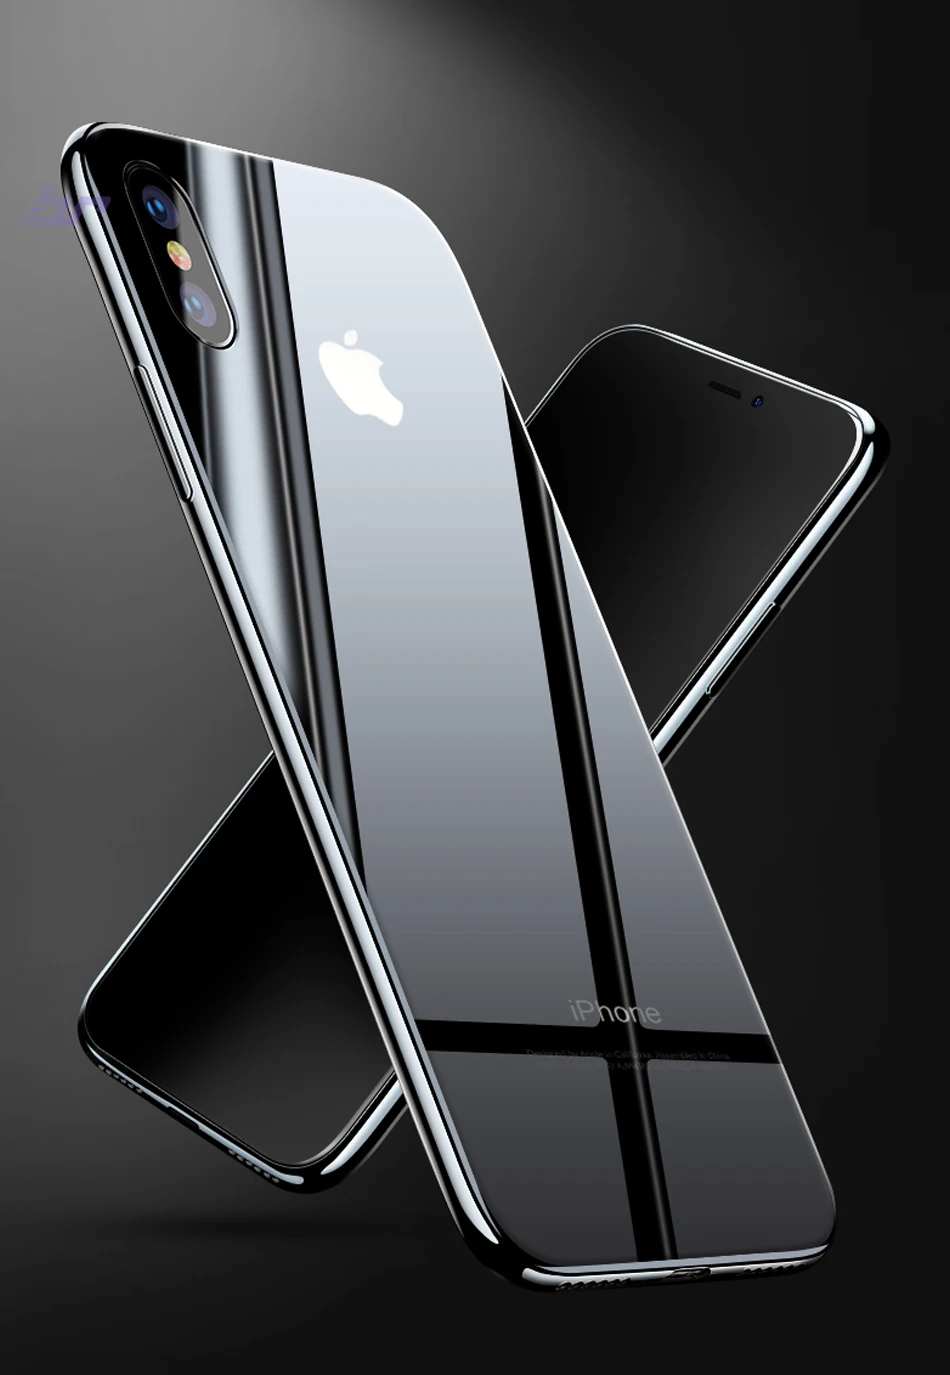 IHaitun глянцевый стеклянный чехол для iPhone 11 Pro Max X XS MAX XR 10 чехлов тонкий прозрачный чехол для iPhone X 7 8 Plus Мягкий